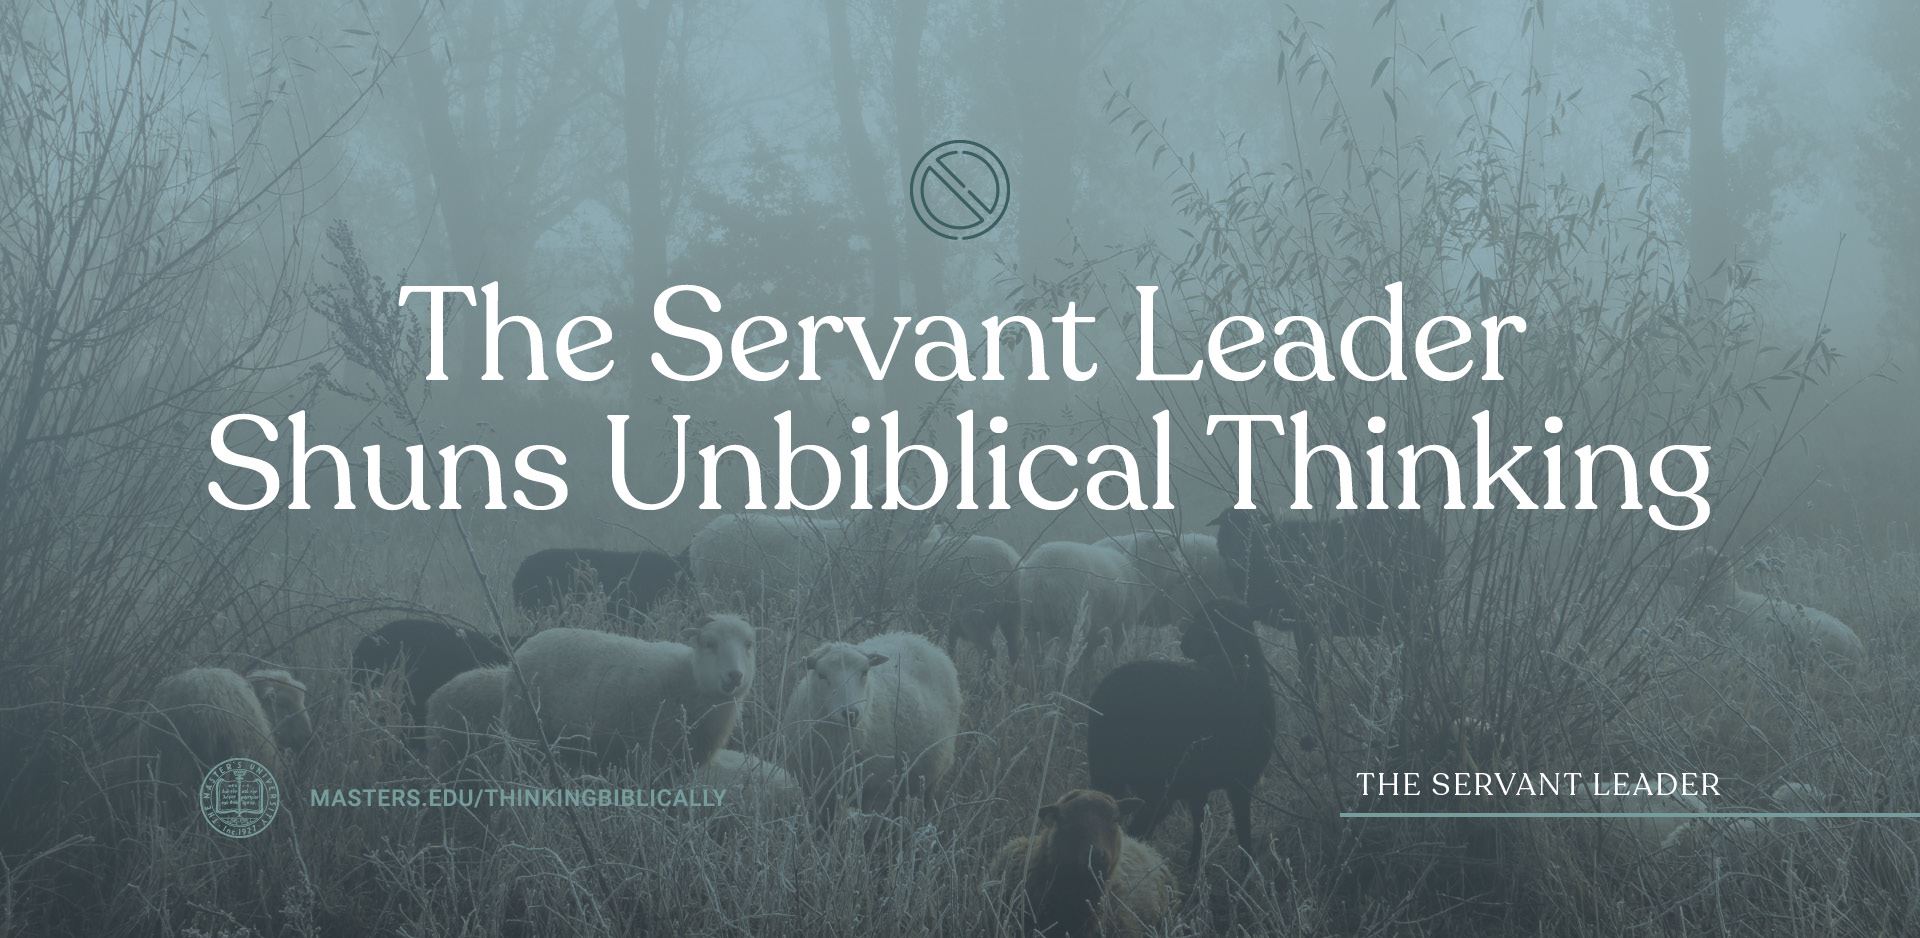 The Servant Leader Shuns Unbiblical Thinking